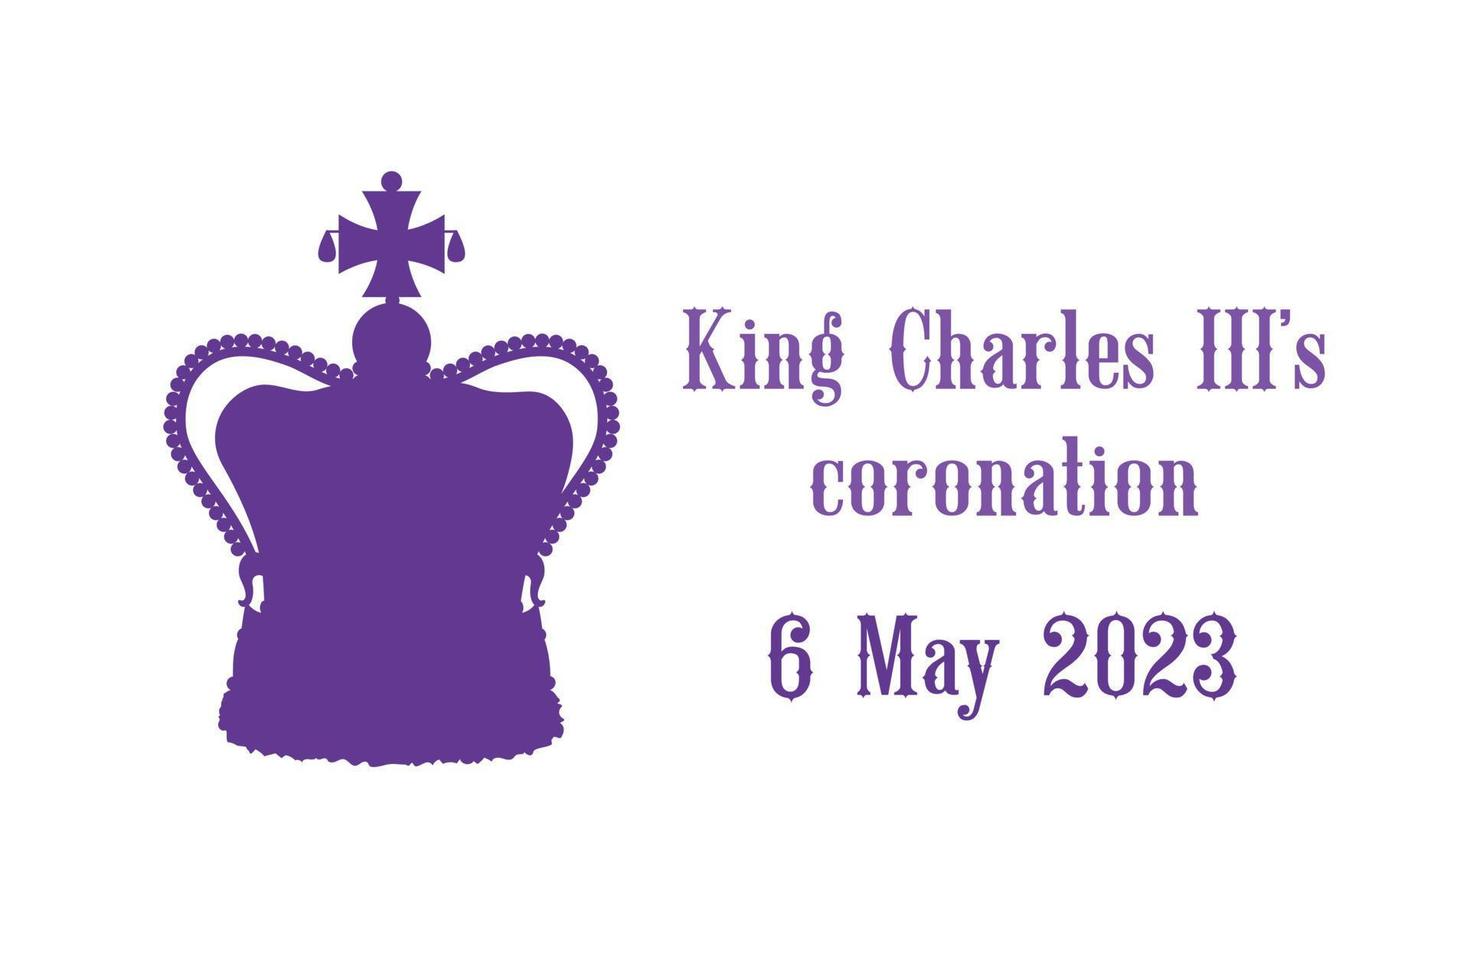 King Charles III coronation 6 May 2023 design banner vector